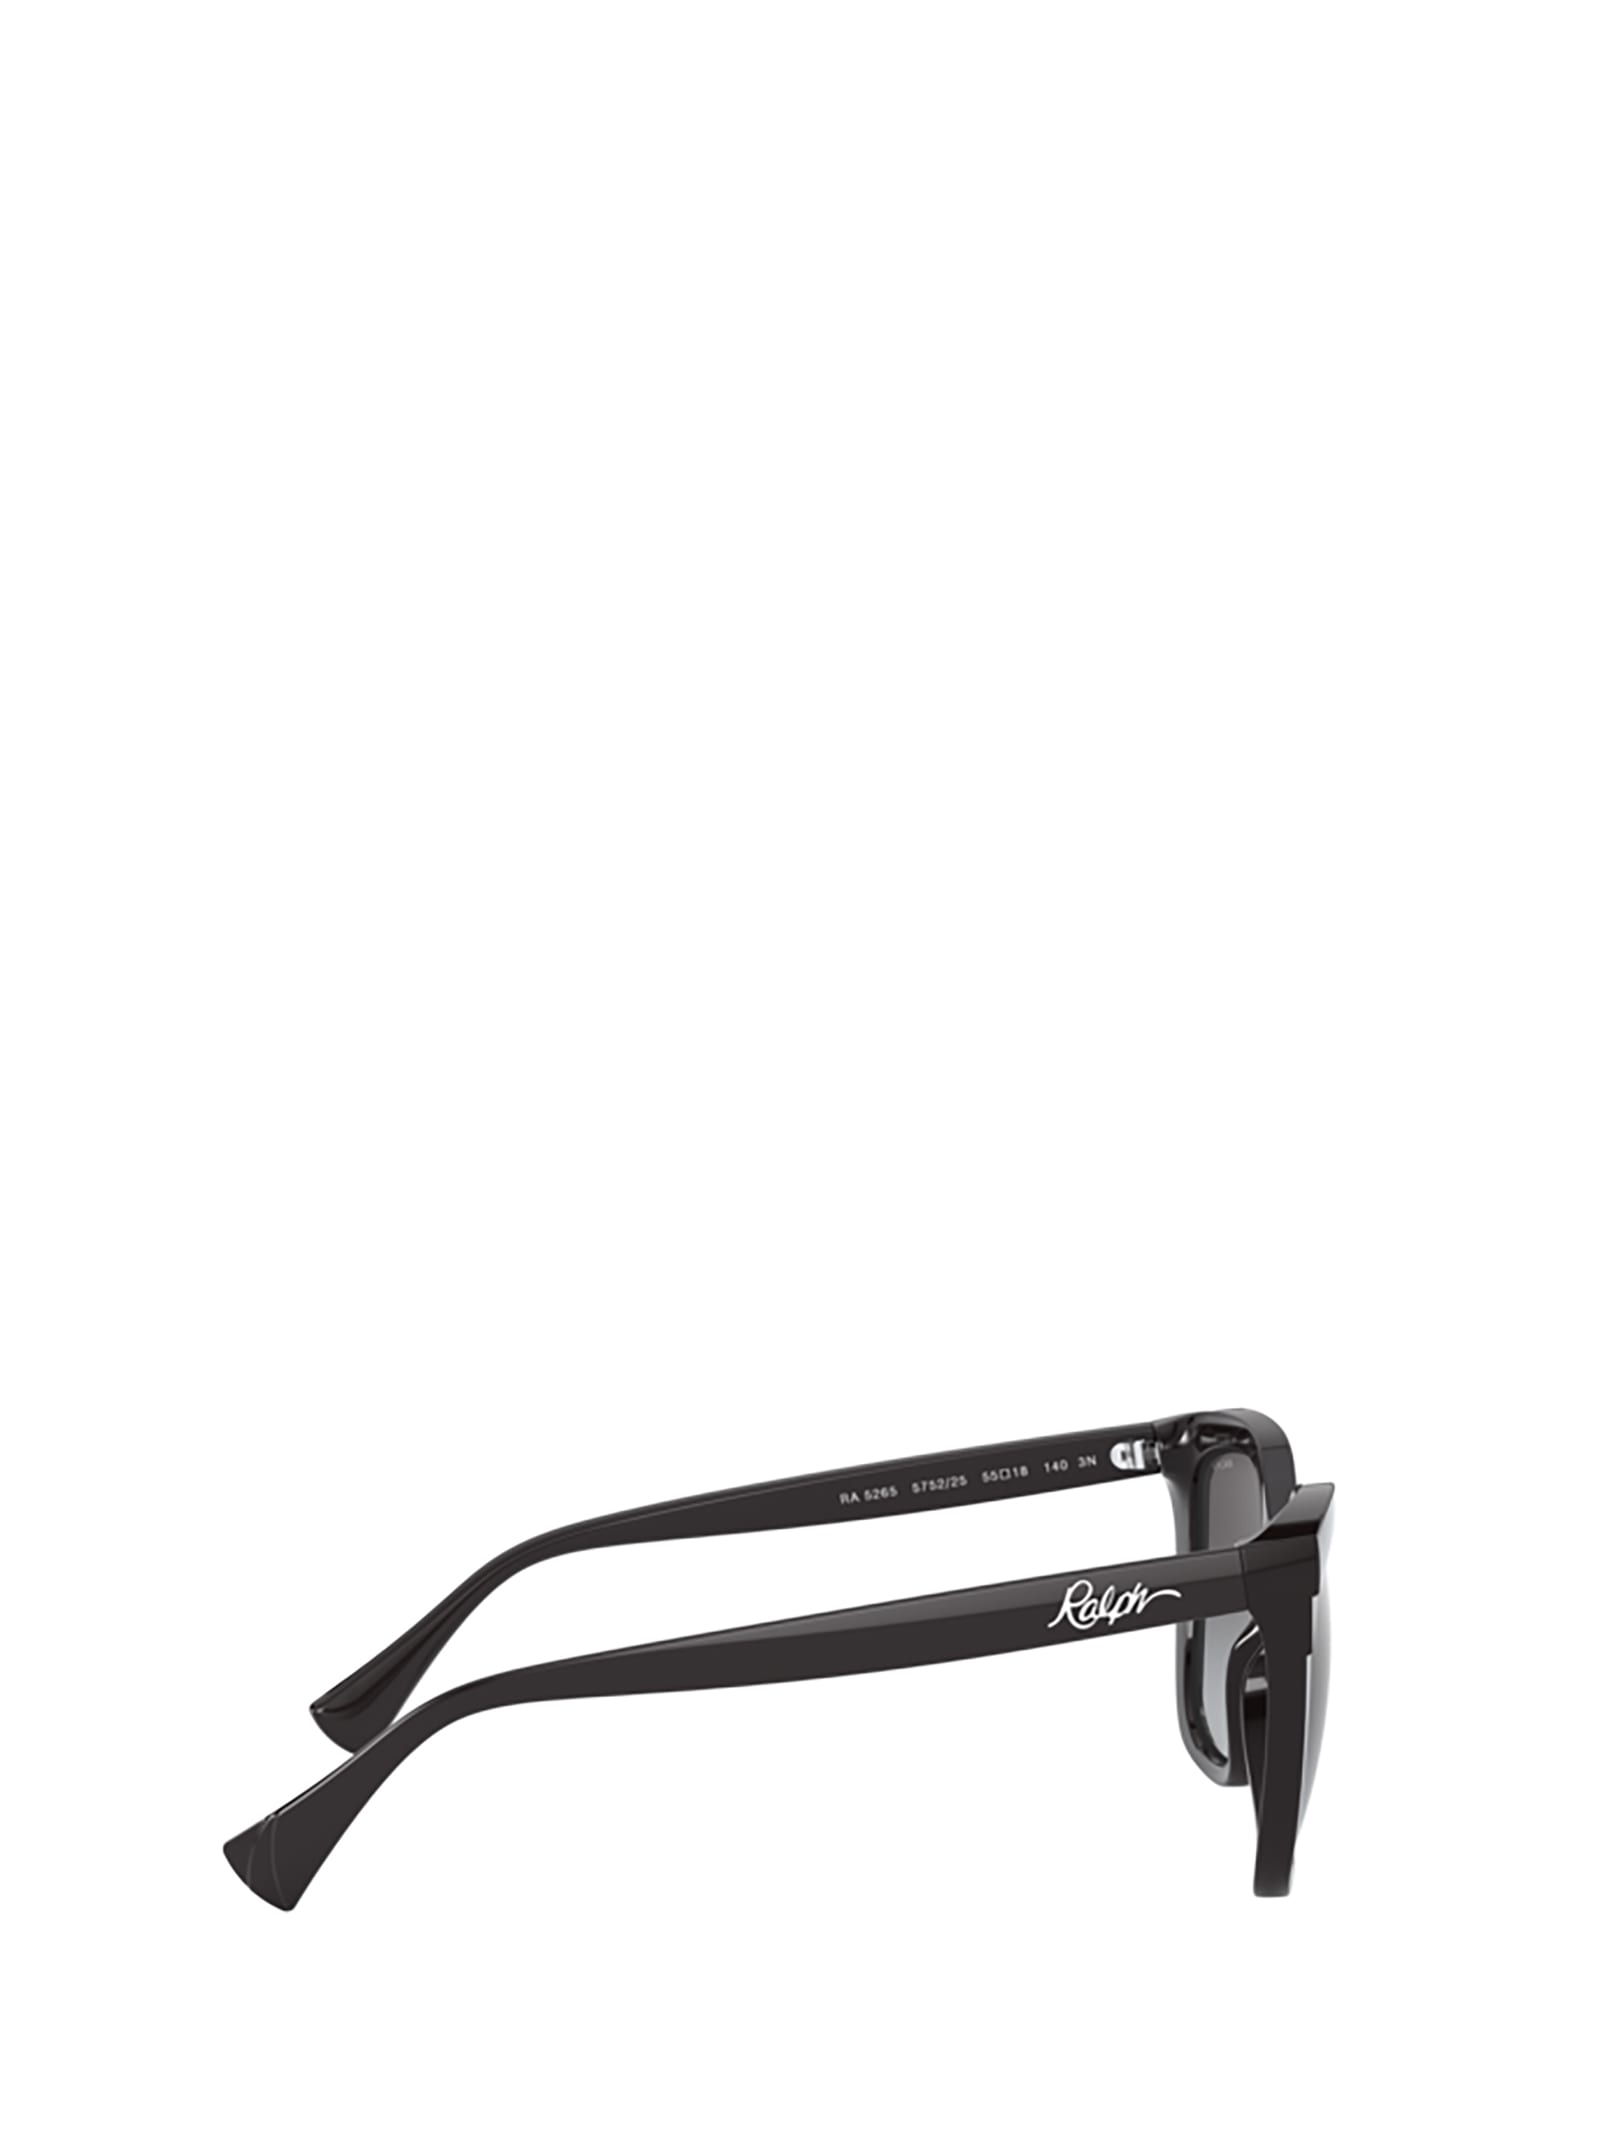 Shop Polo Ralph Lauren Ra5265 Shiny Black Sunglasses